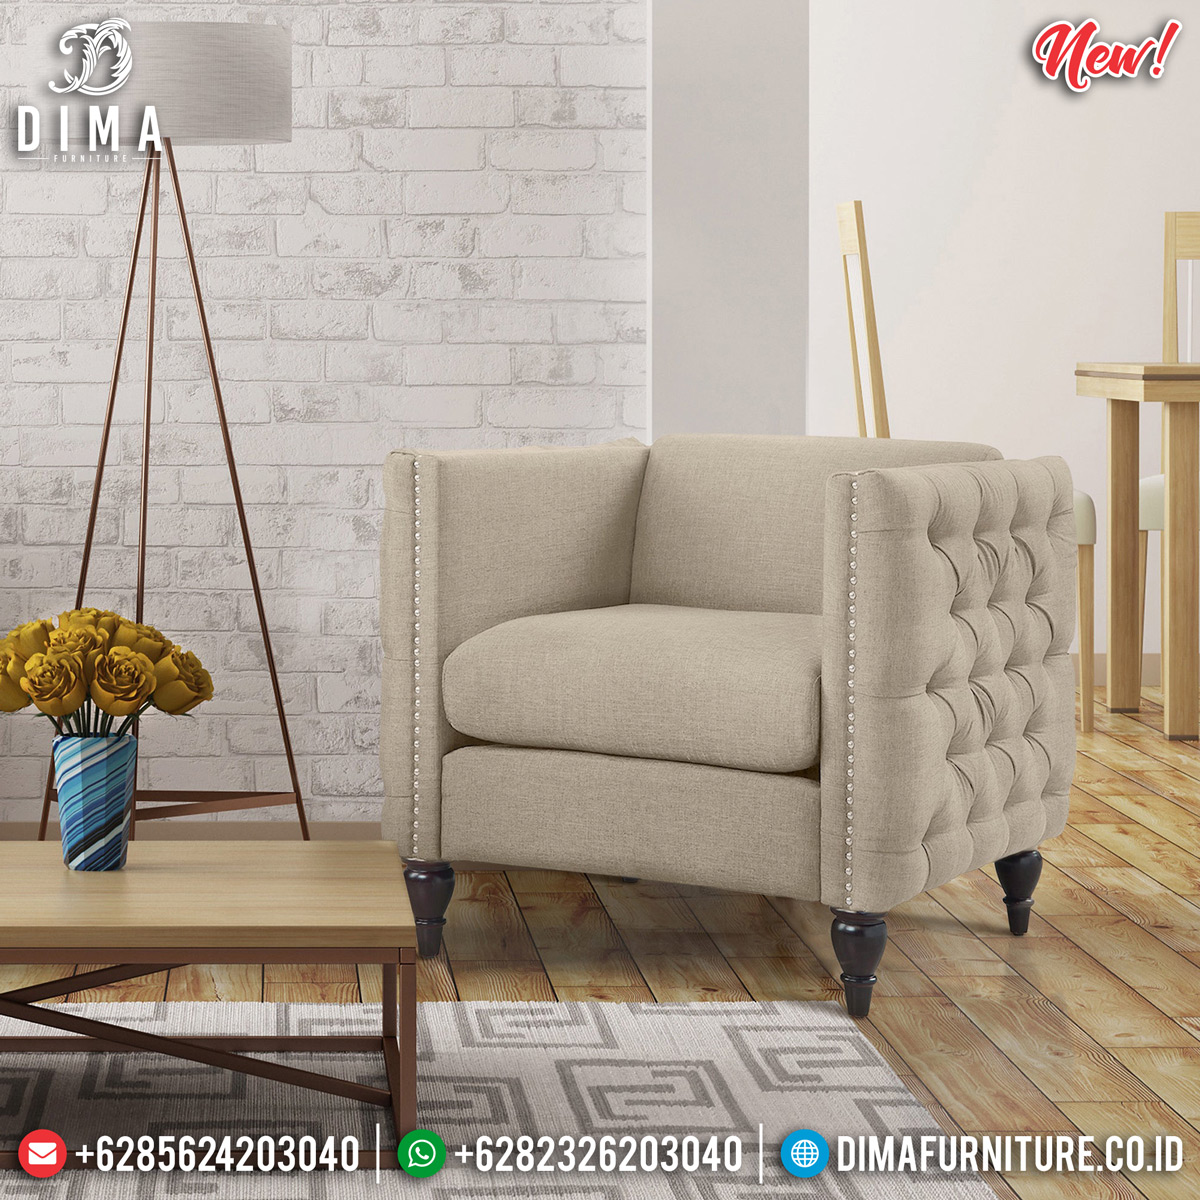 Jual Sofa Minimalis Jepara Terbaru Design Minimalist Inspiring BT-0732